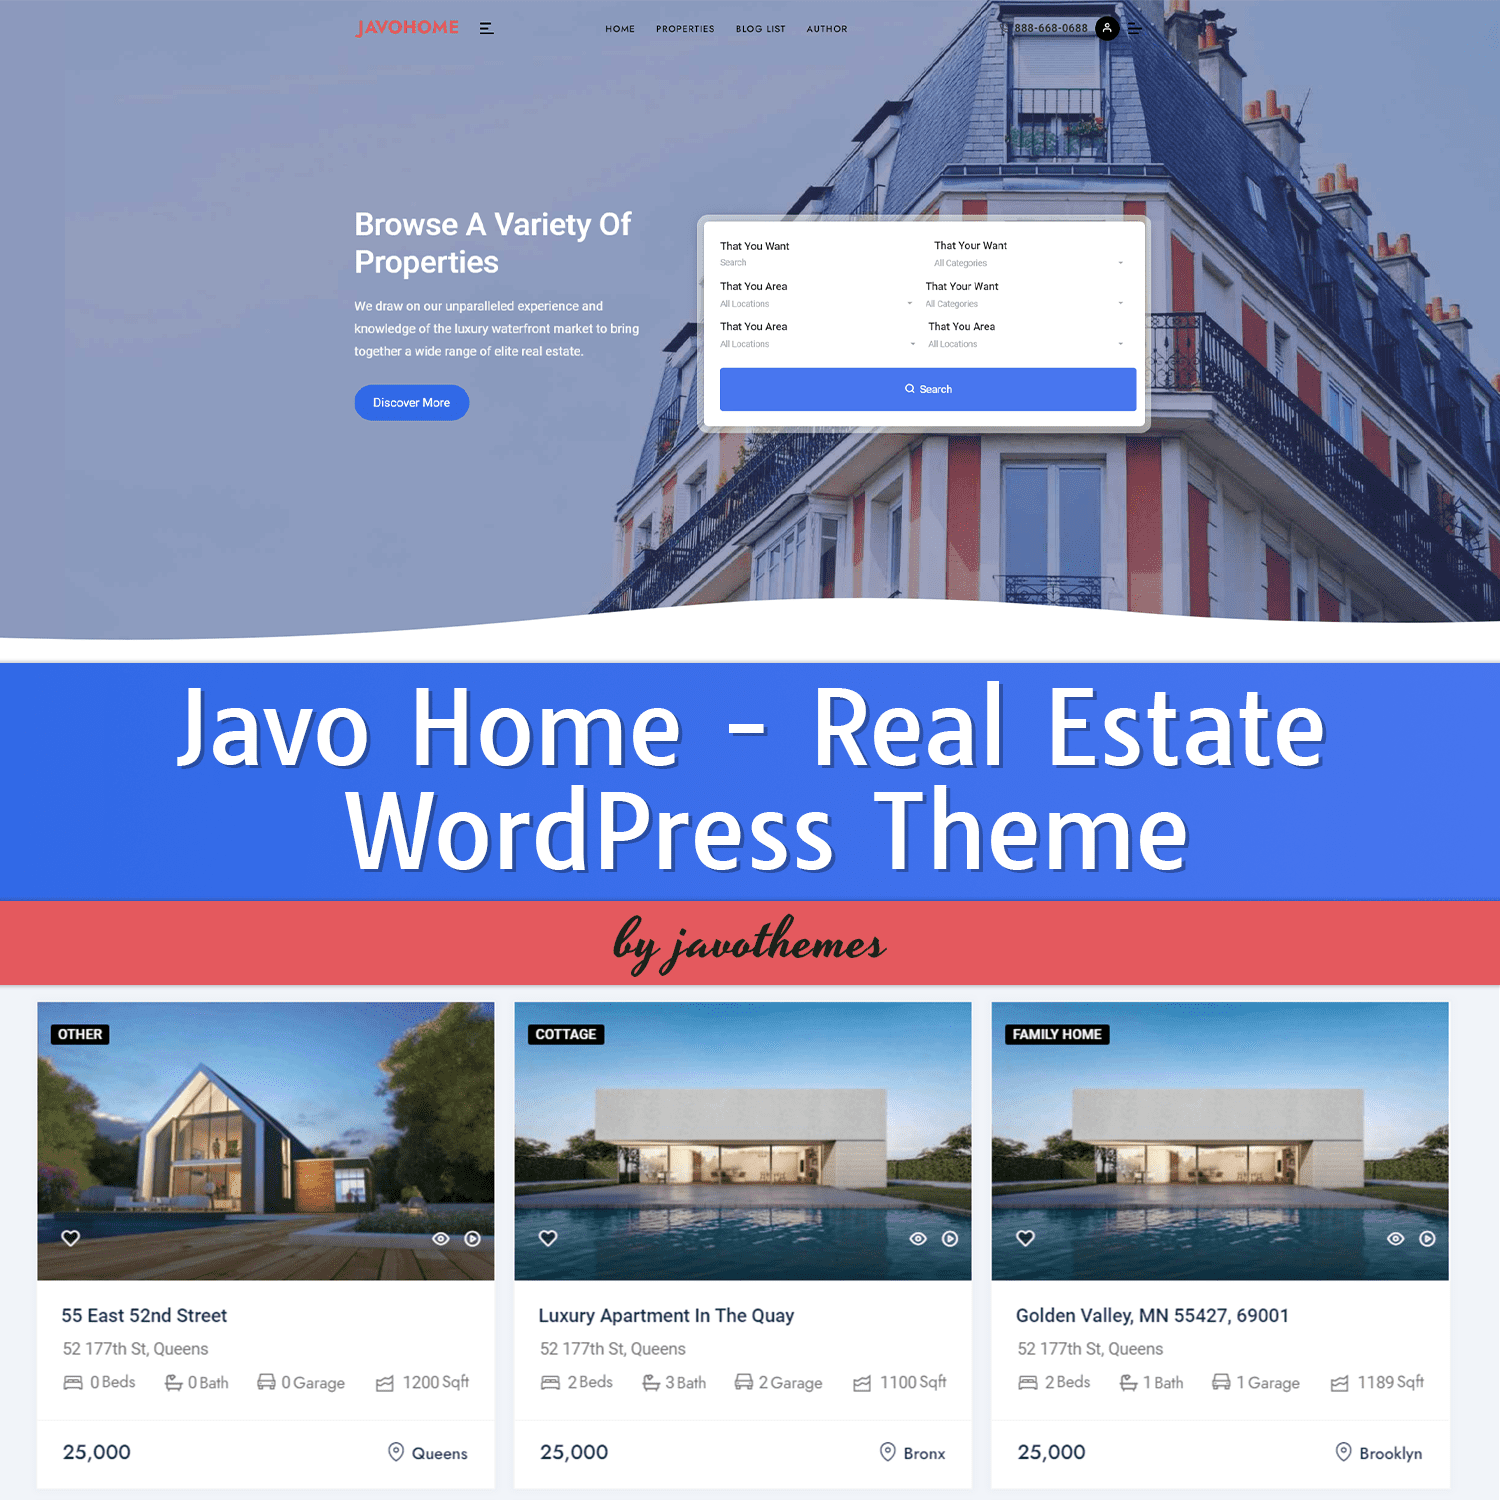 Javo Home - Real Estate WordPress Theme cover.